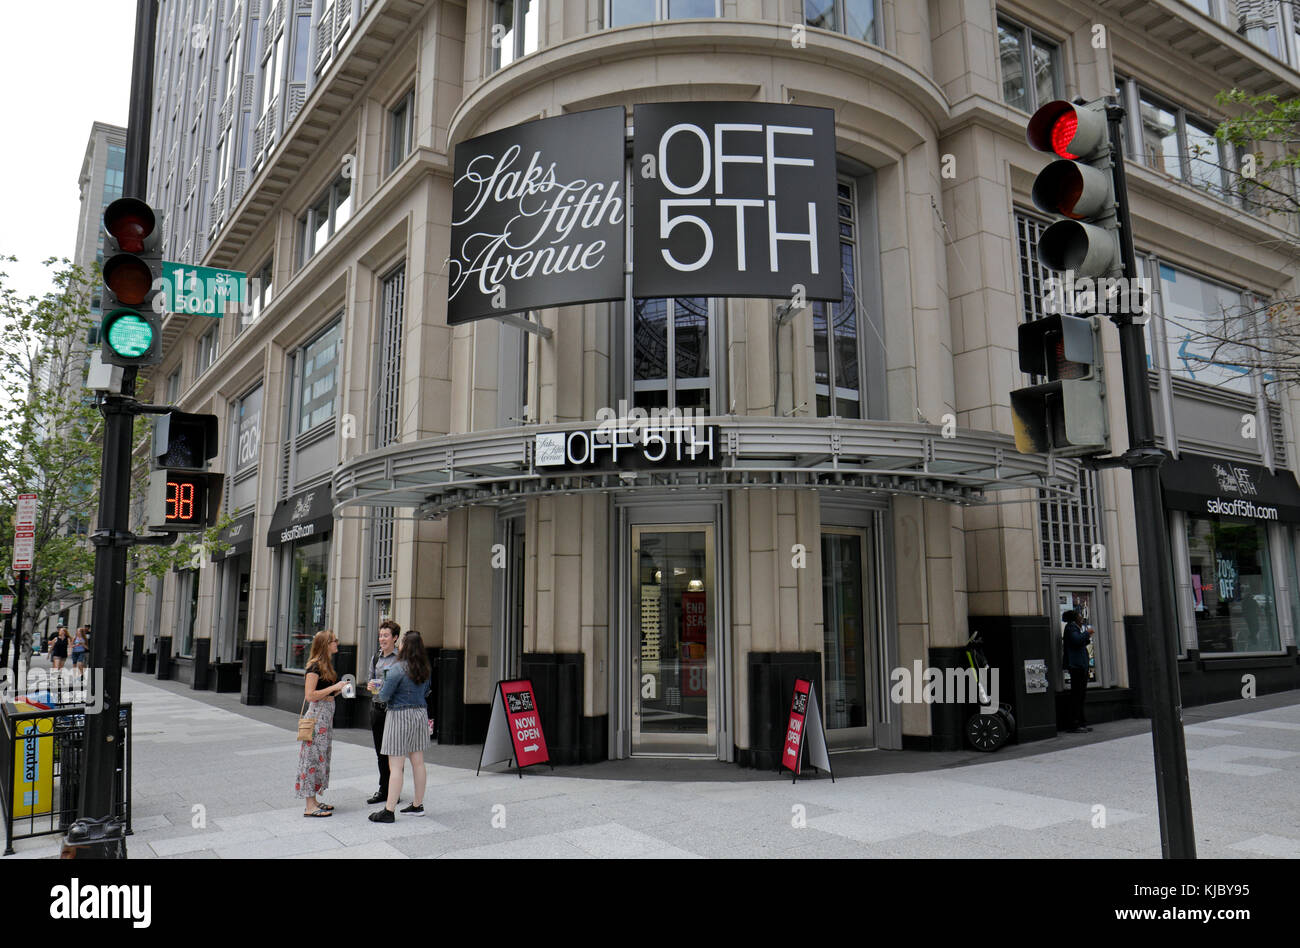 Die Saks Fifth Avenue Off 5 Retail Outlet am 11 ST NW, Washington DC, USA  Stockfotografie - Alamy